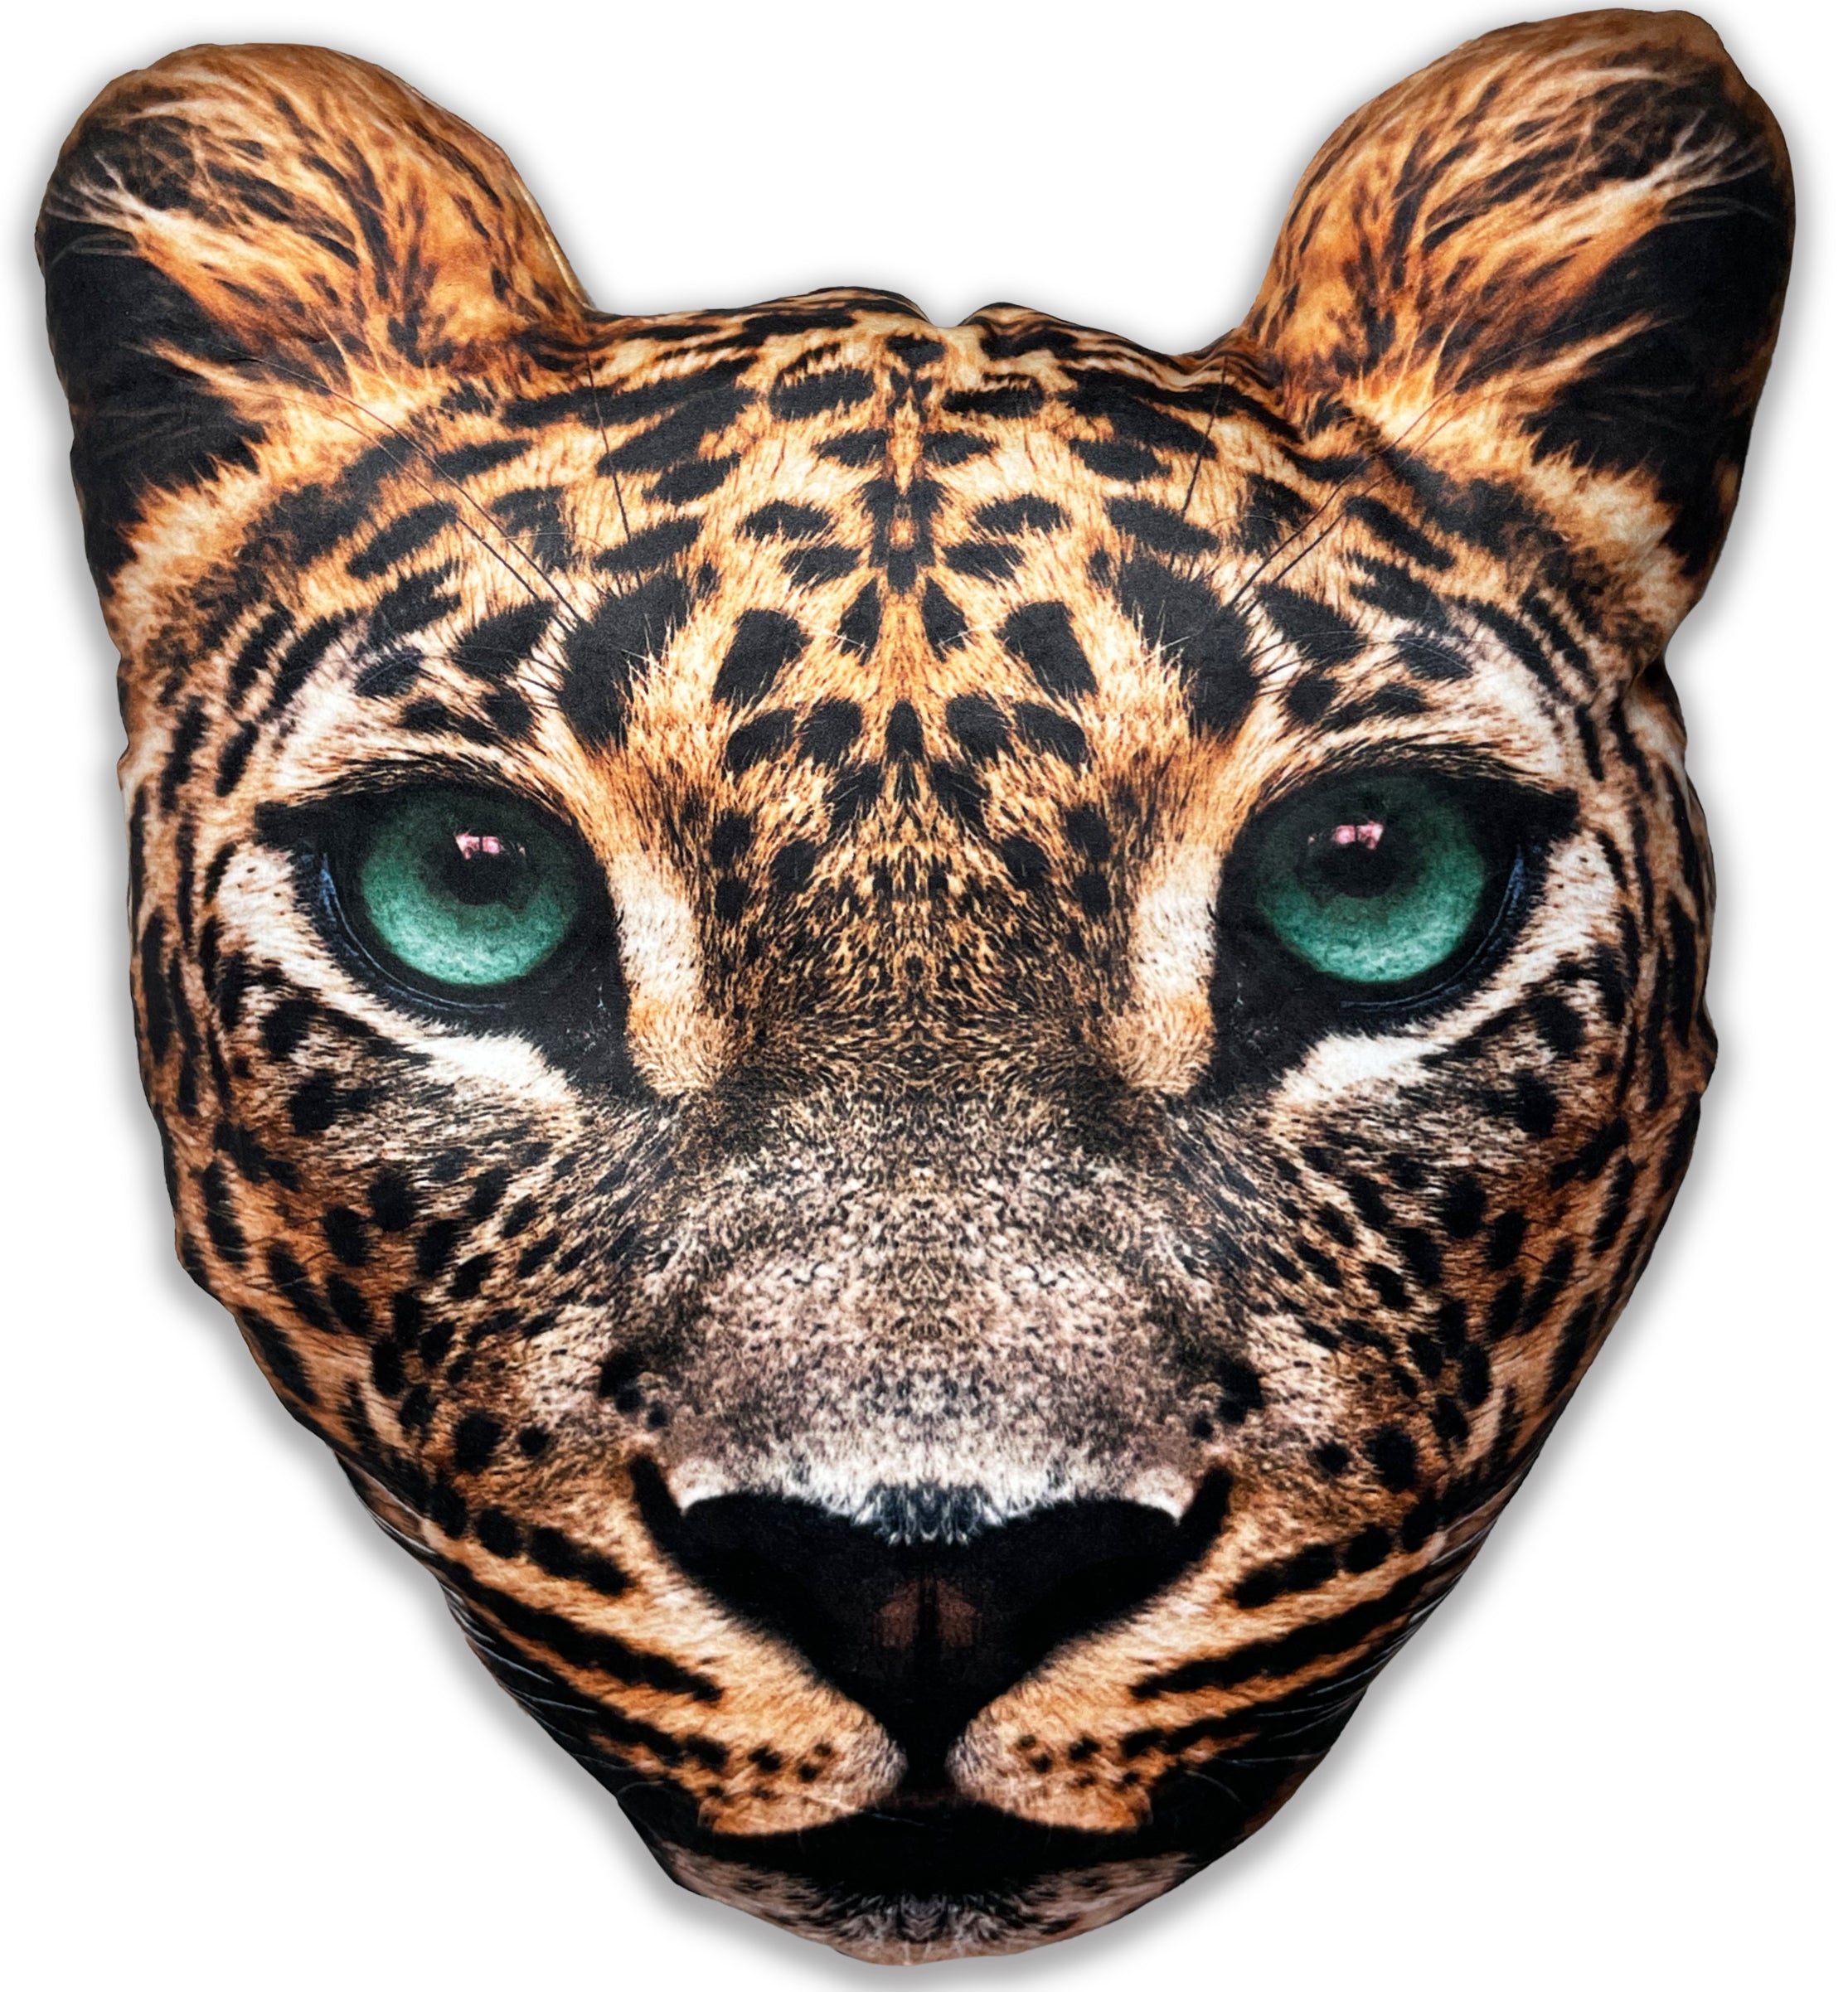 Leopard cushion, realistic Leopard face cushion, gifts for animal lovers, animal cushion, animal teddy, big cat cushion, animal face cushion, animal toy